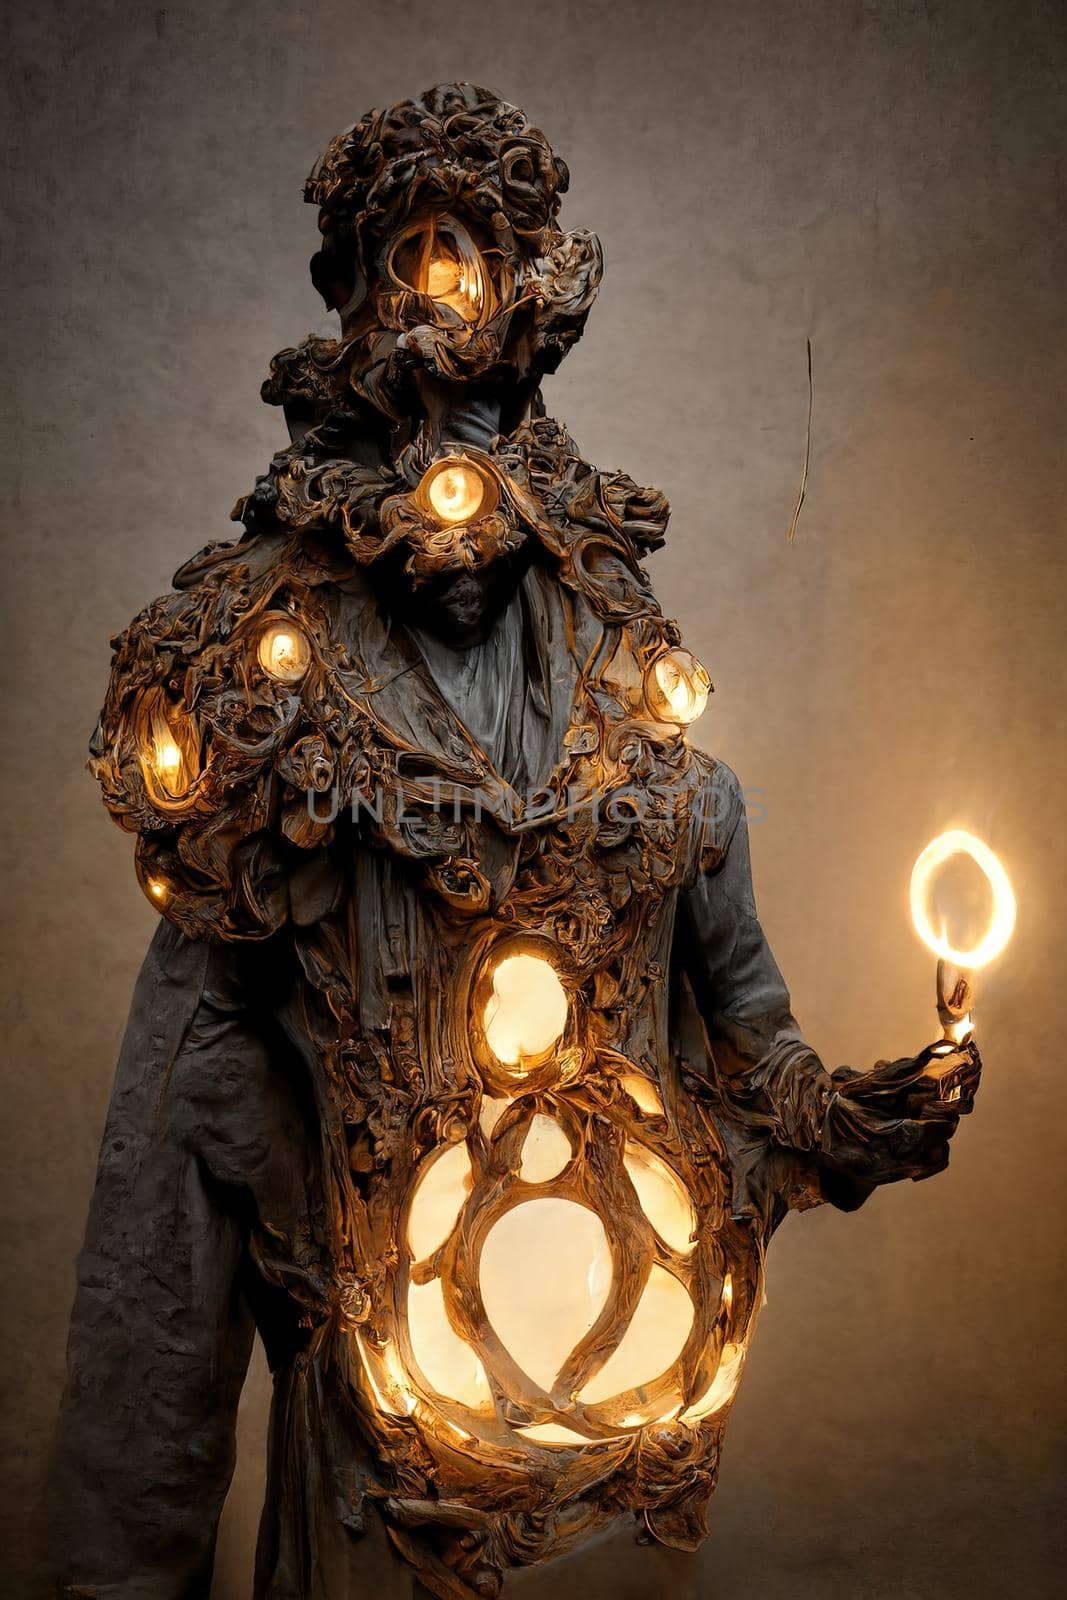 Abstract baroque sculpture of man of light,3d illustration